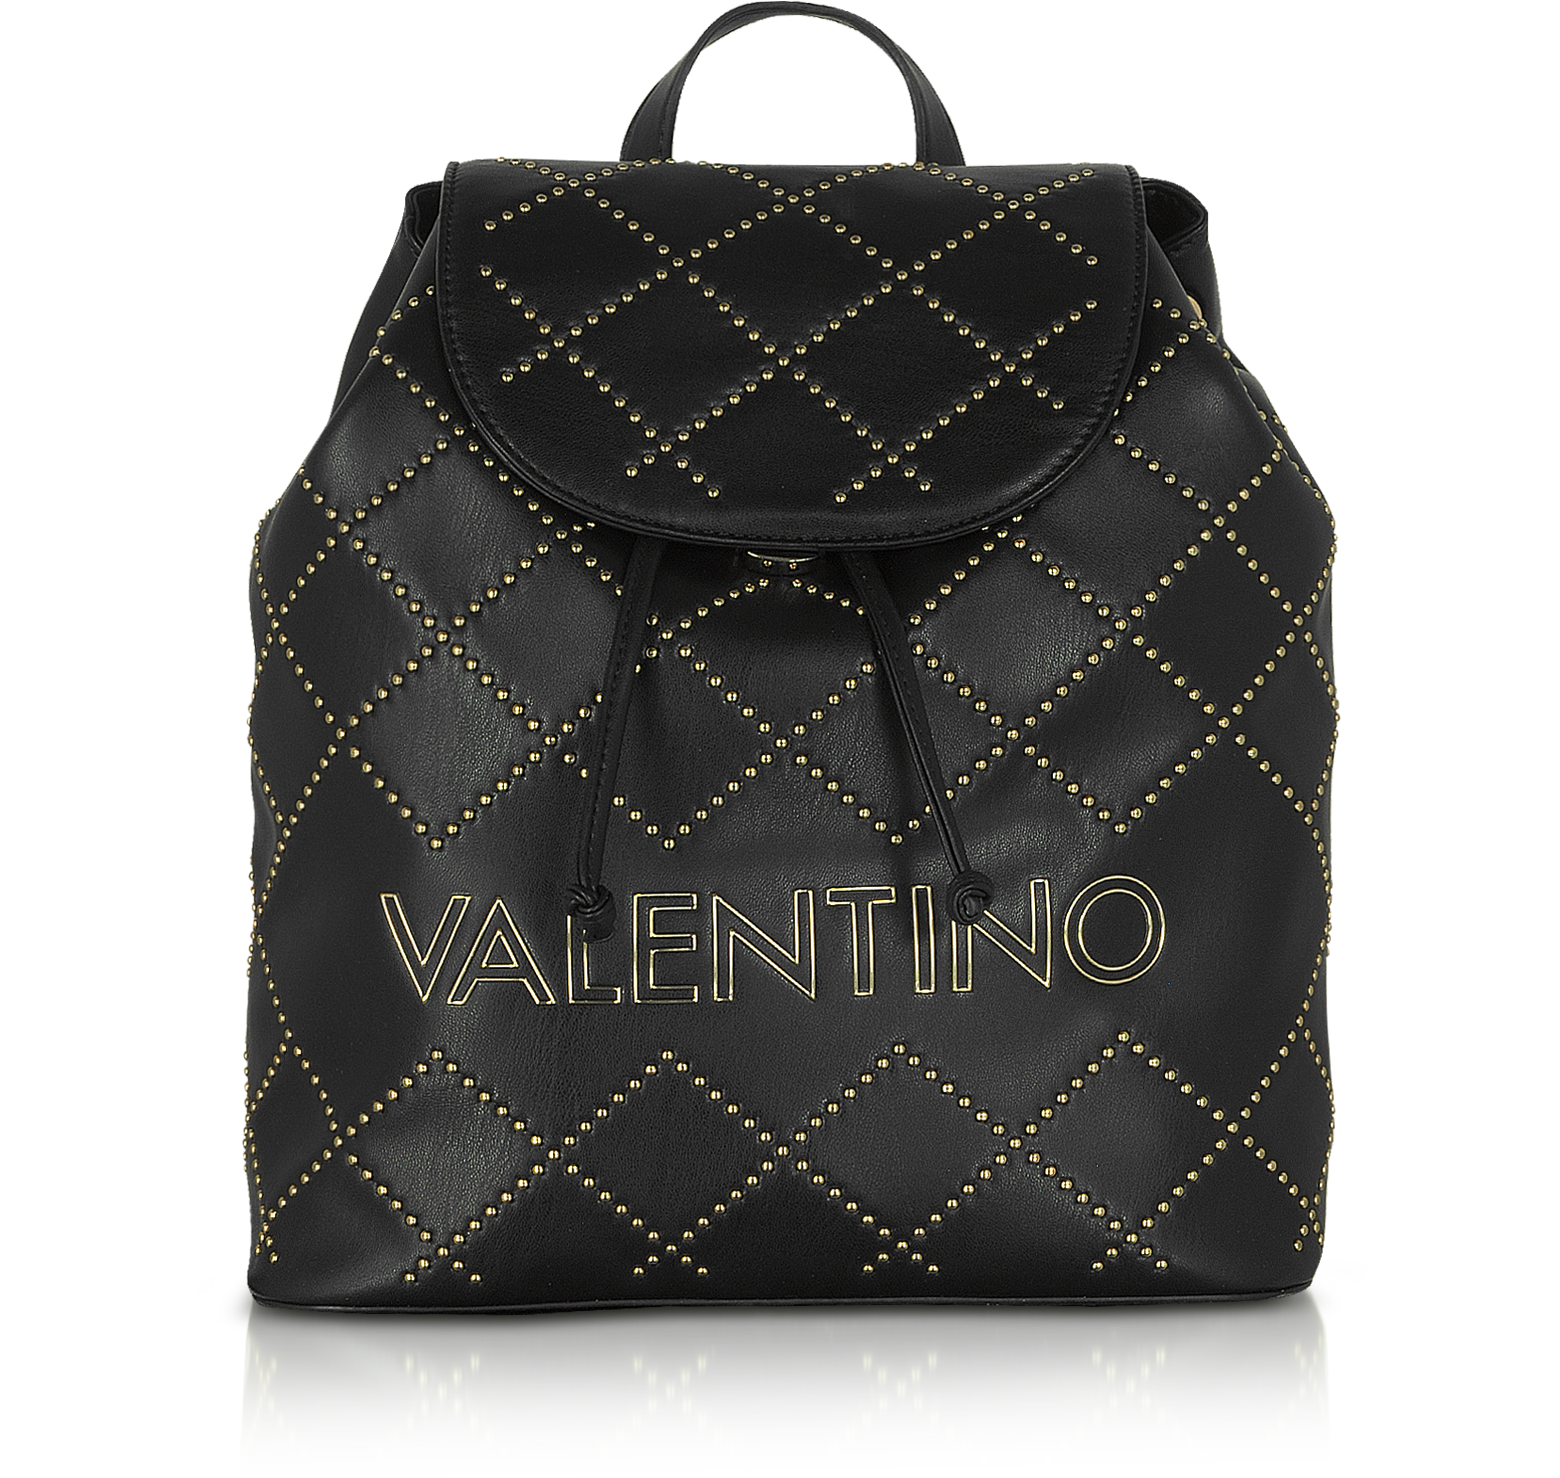 Valentino By Mario Valentino Backpack